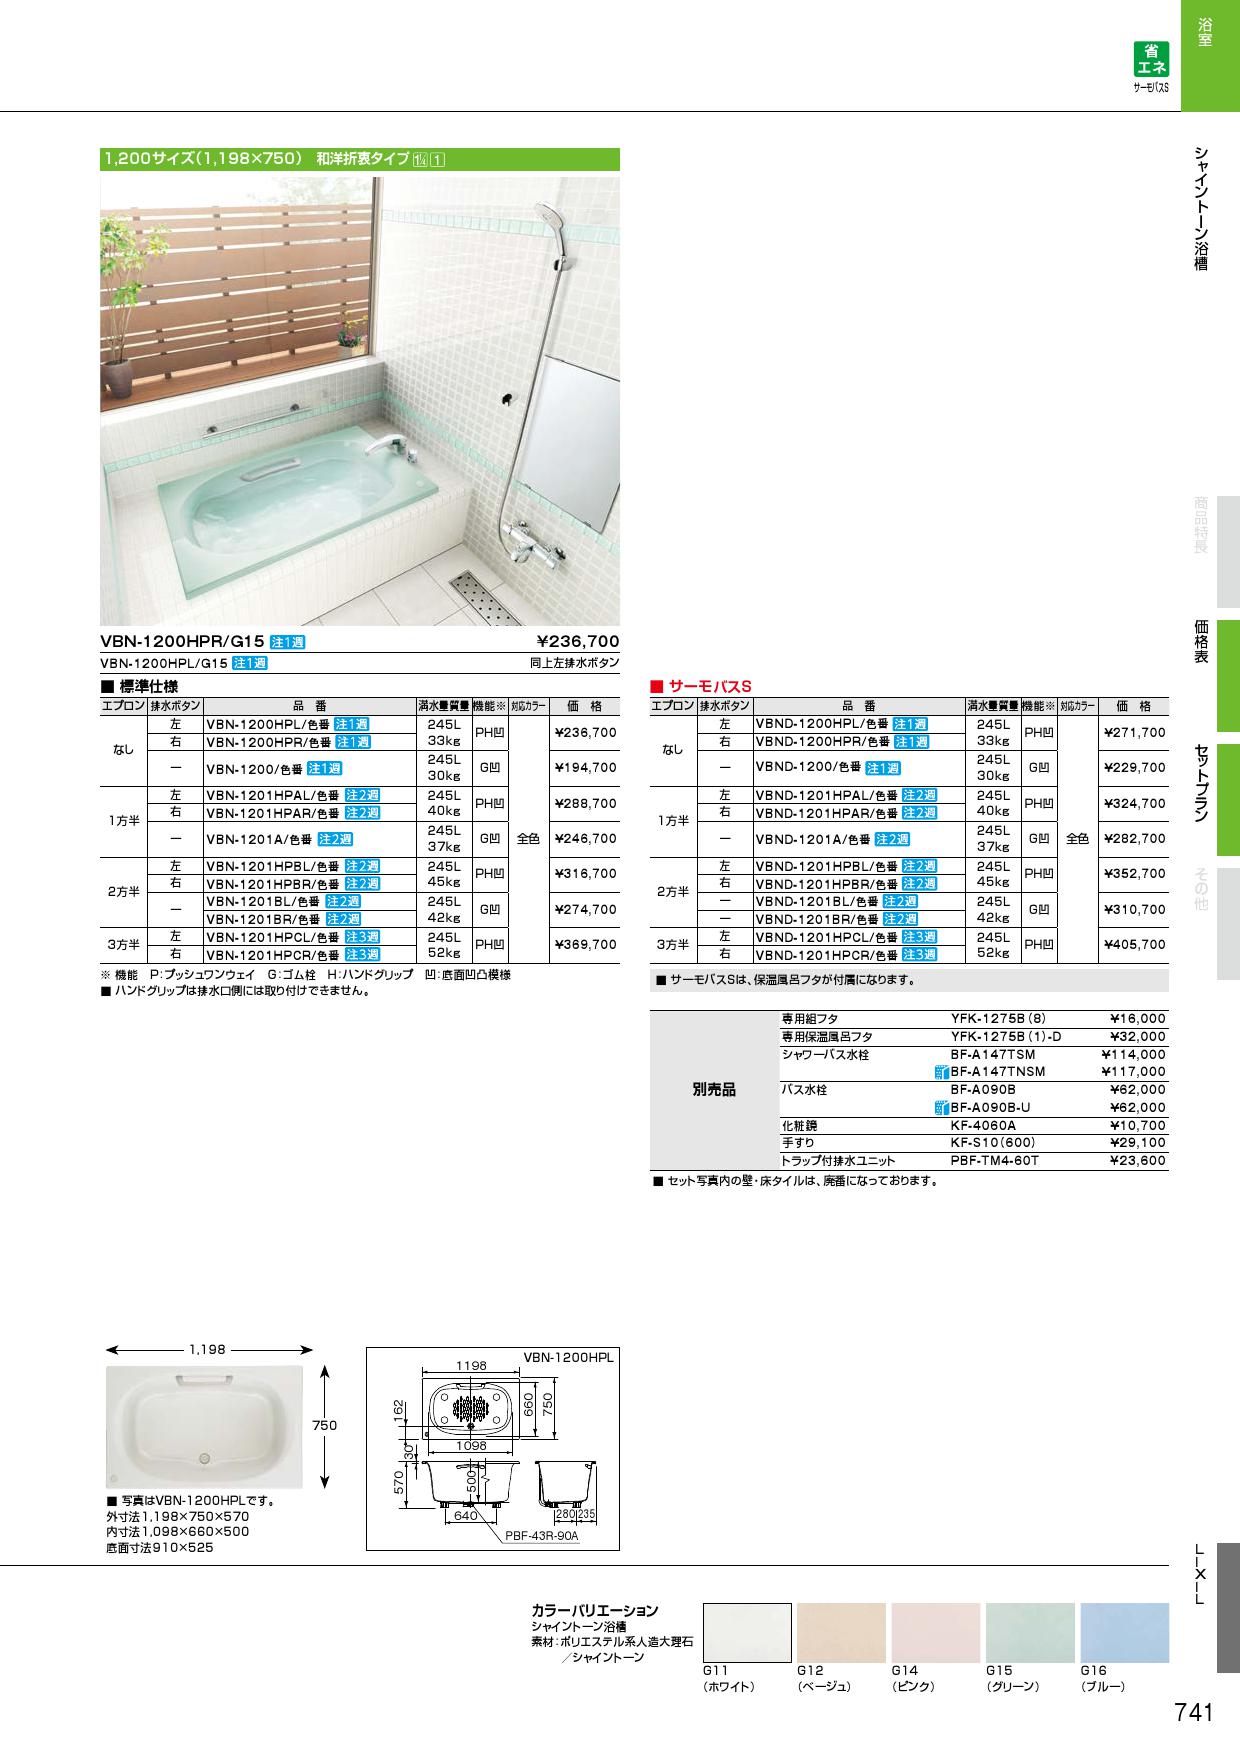 VBN-1201HPAL】 リクシル シャイントーン浴槽(一方半エプロン) яз∠ vbn-1201hpal アールホームマート  !店 通販 